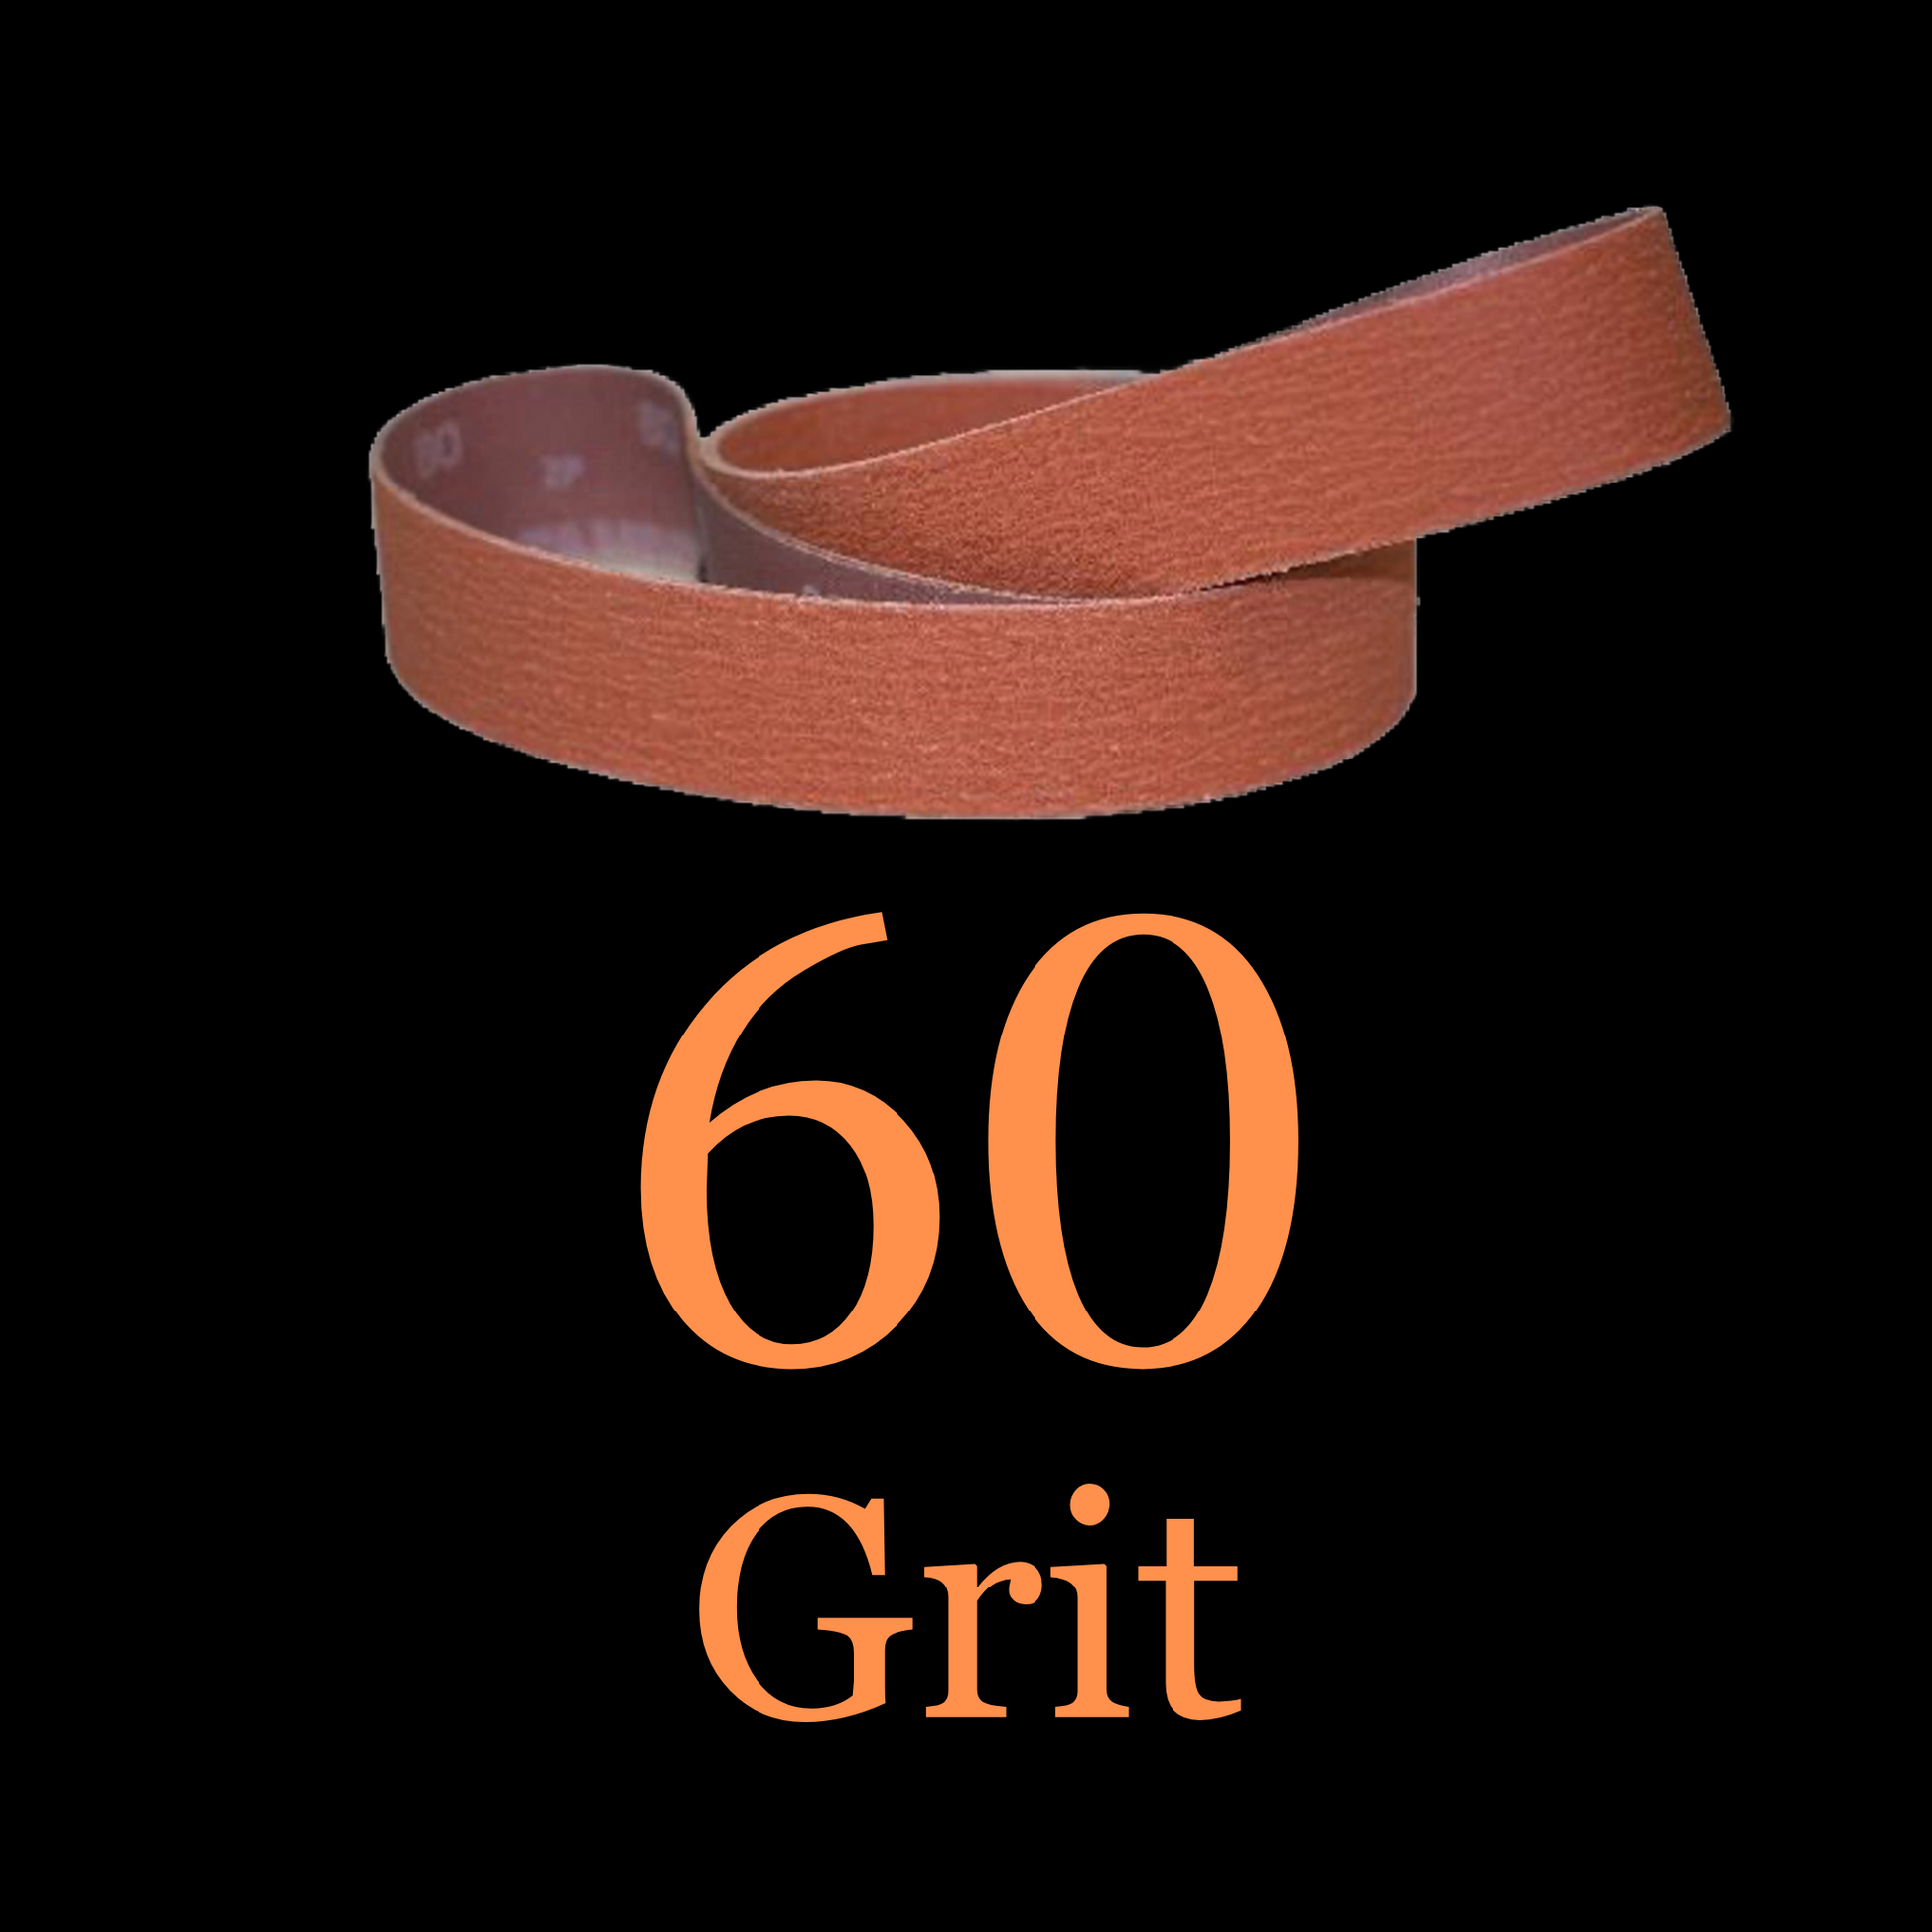 1” x 42” Blaze Ceramic Belt 60 Grit